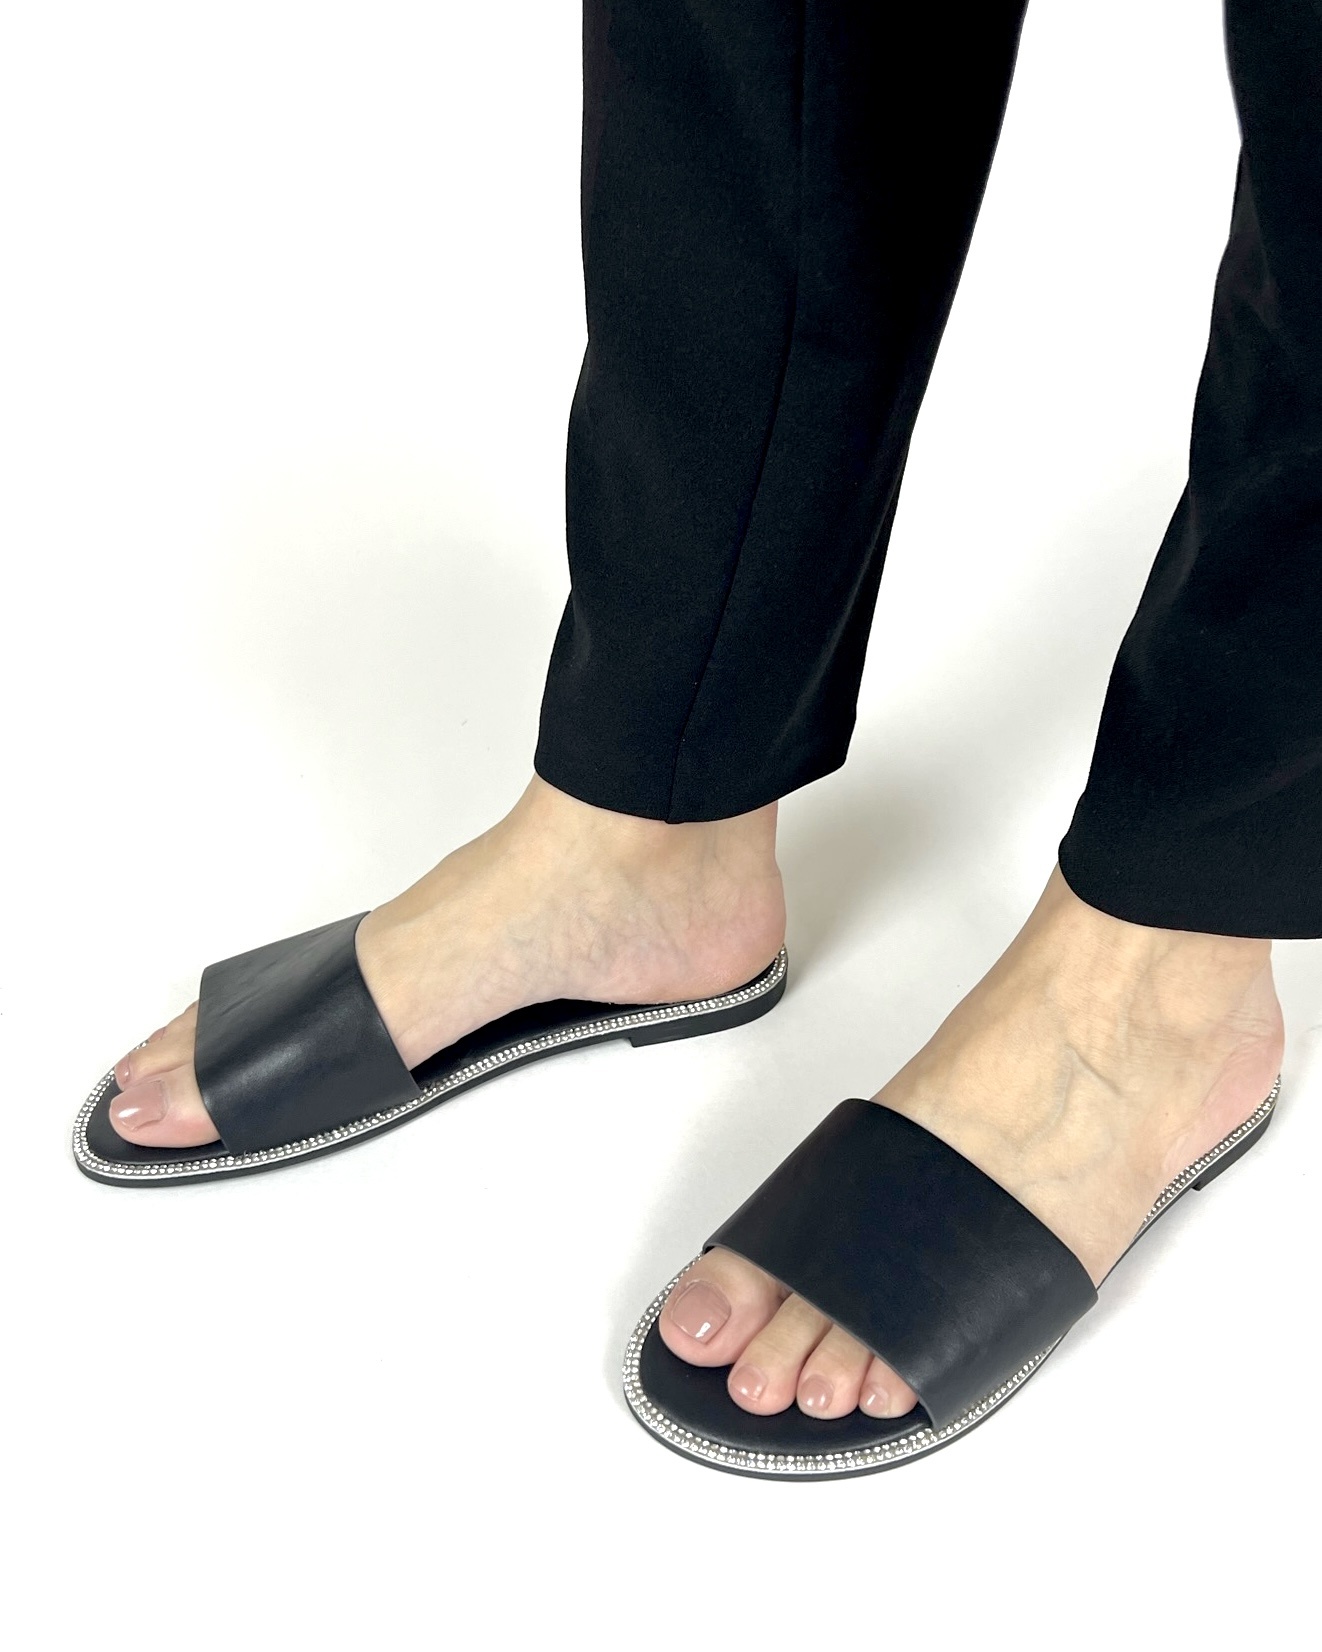 rhinestone-embellished flat sandals | René Caovilla | Eraldo.com